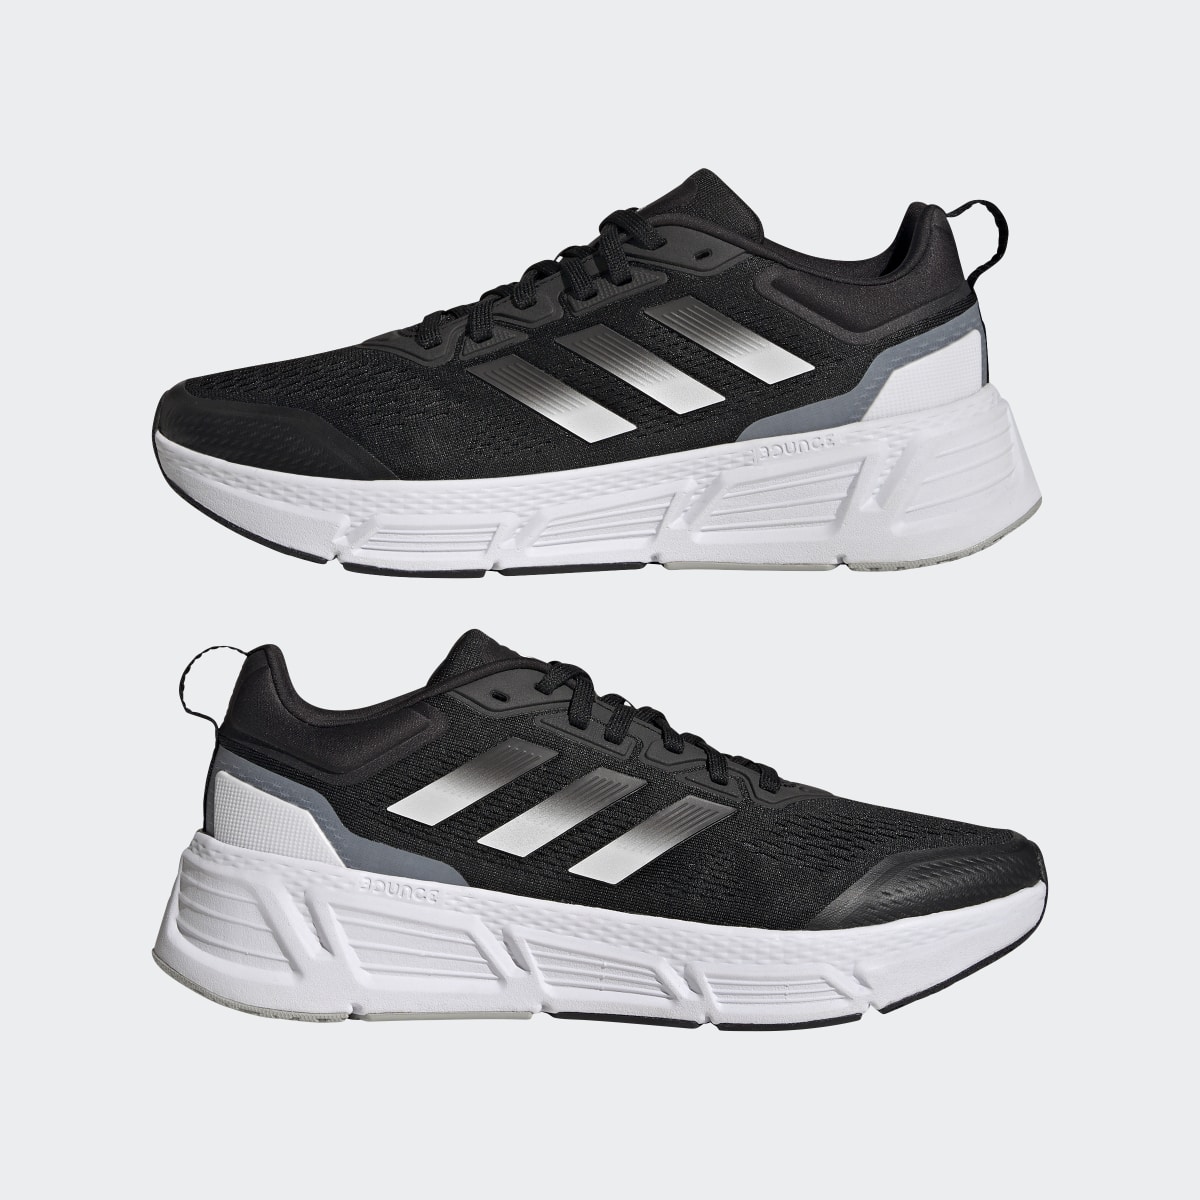 Adidas Questar Running Shoes. 8